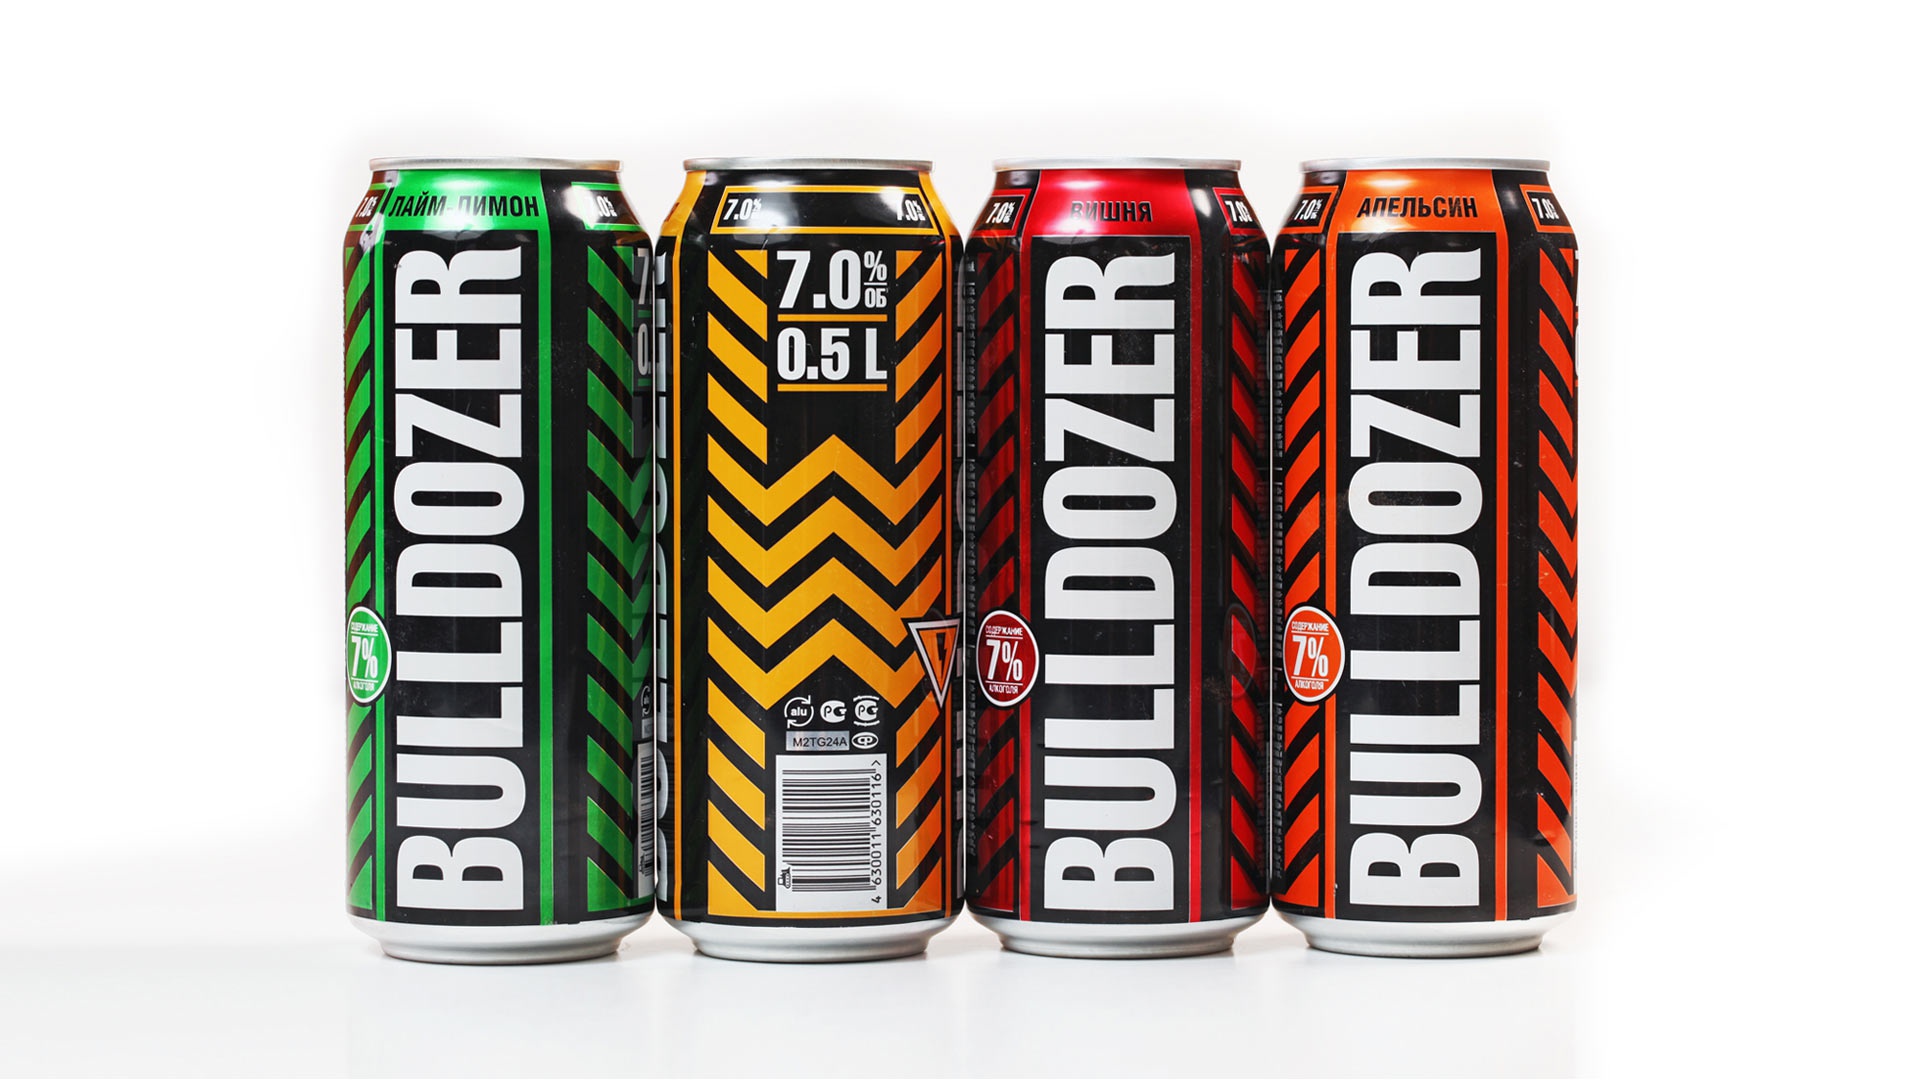 Артисан: Артисан: Дизайн банки пивного напитка Bulldozer (2.1)